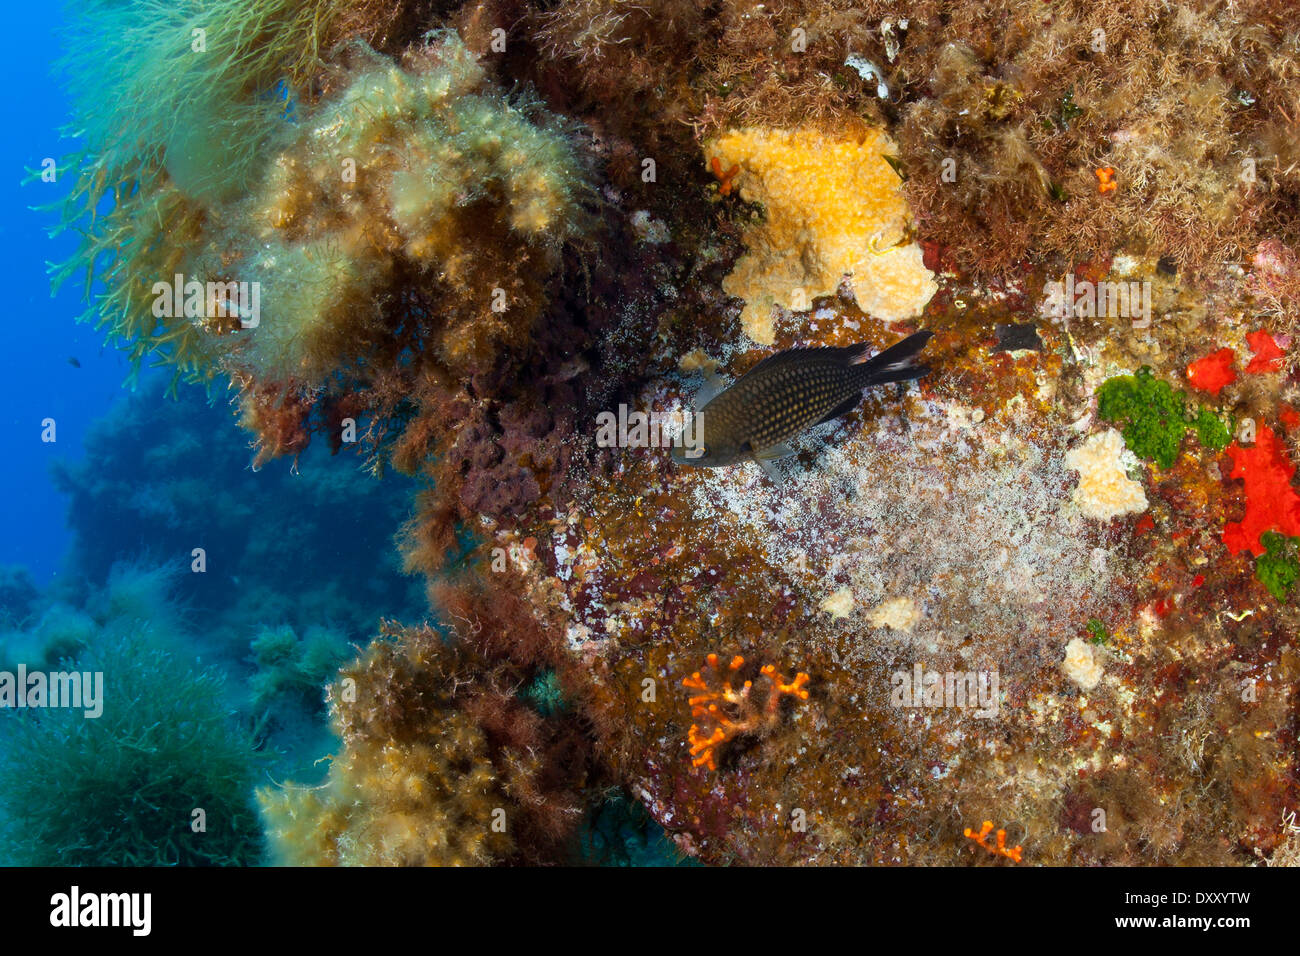 Mediterranean Damselfish breeding, Chromis chromis, Ponza Ilsland, Mediterranean Sea, Italy Stock Photo